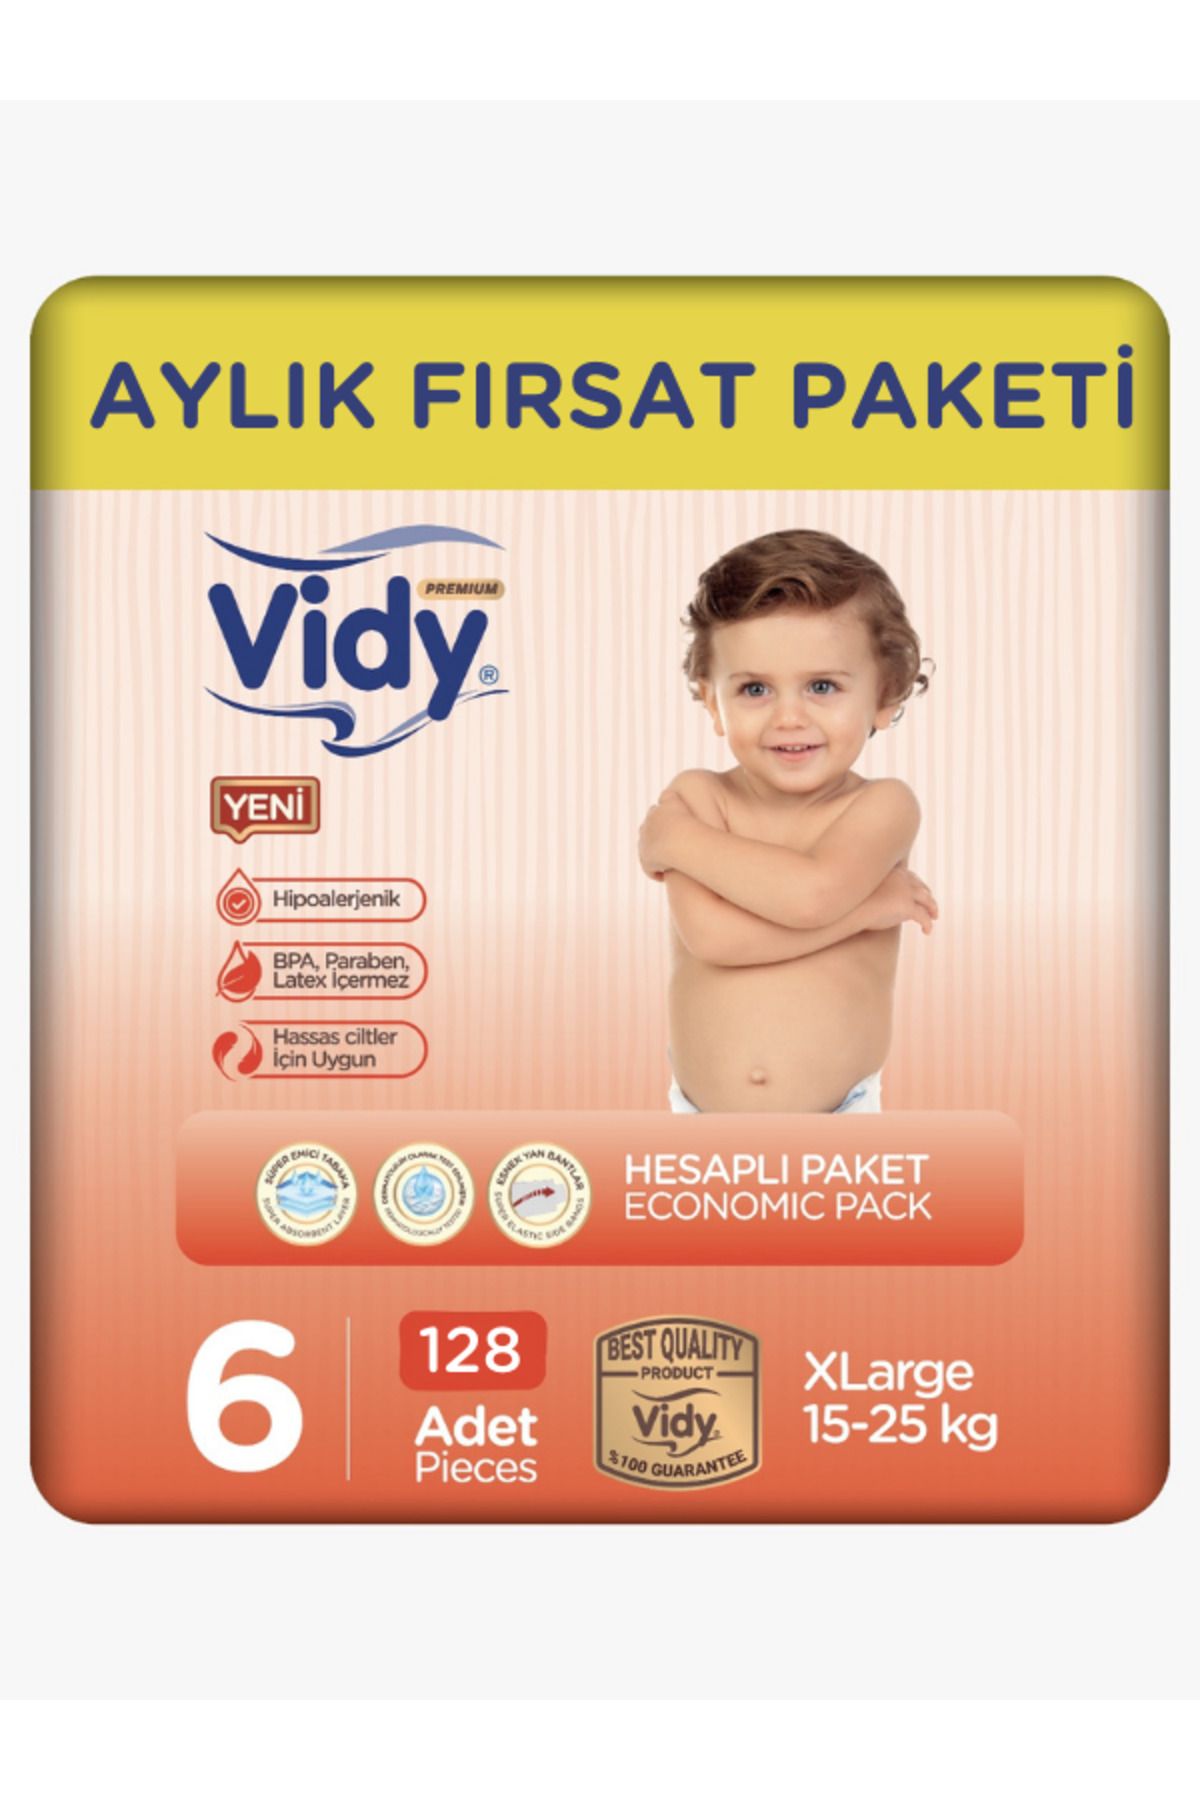 Vidy Bebek Bezi 6 Numara X-large Premium 128 Adet 32x4 Paket Ekonomik/15-25 Kg/ Sızdırmaz Hipoalerjenik